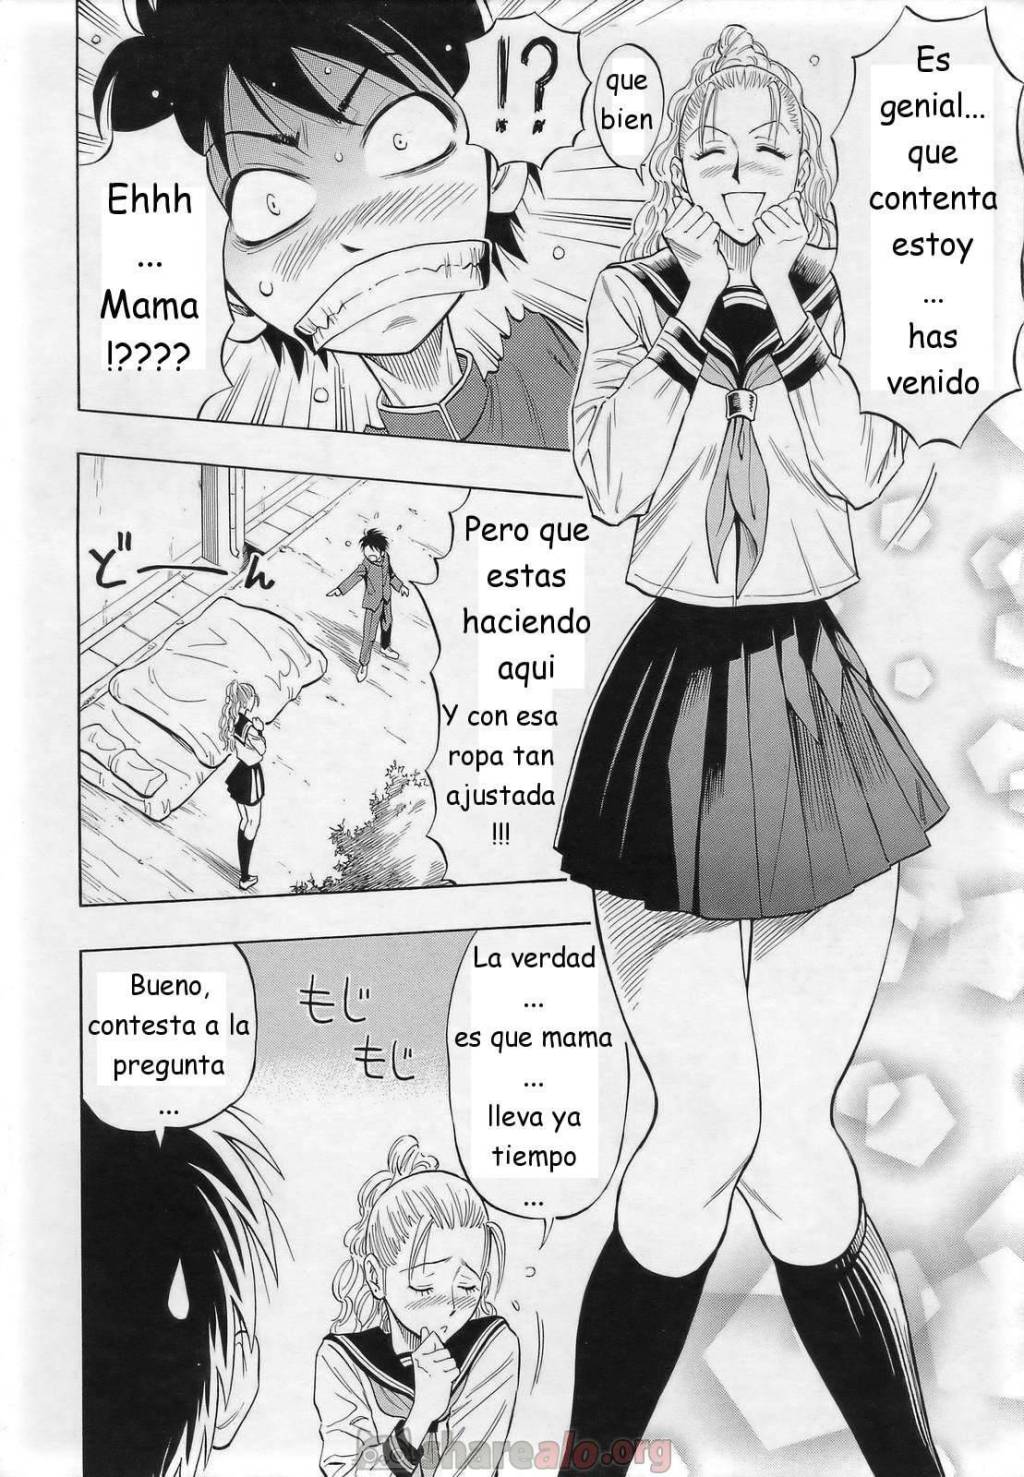 Sailor Mama (Mama Marinerita) - 8 - Comics Porno - Hentai Manga - Cartoon XXX